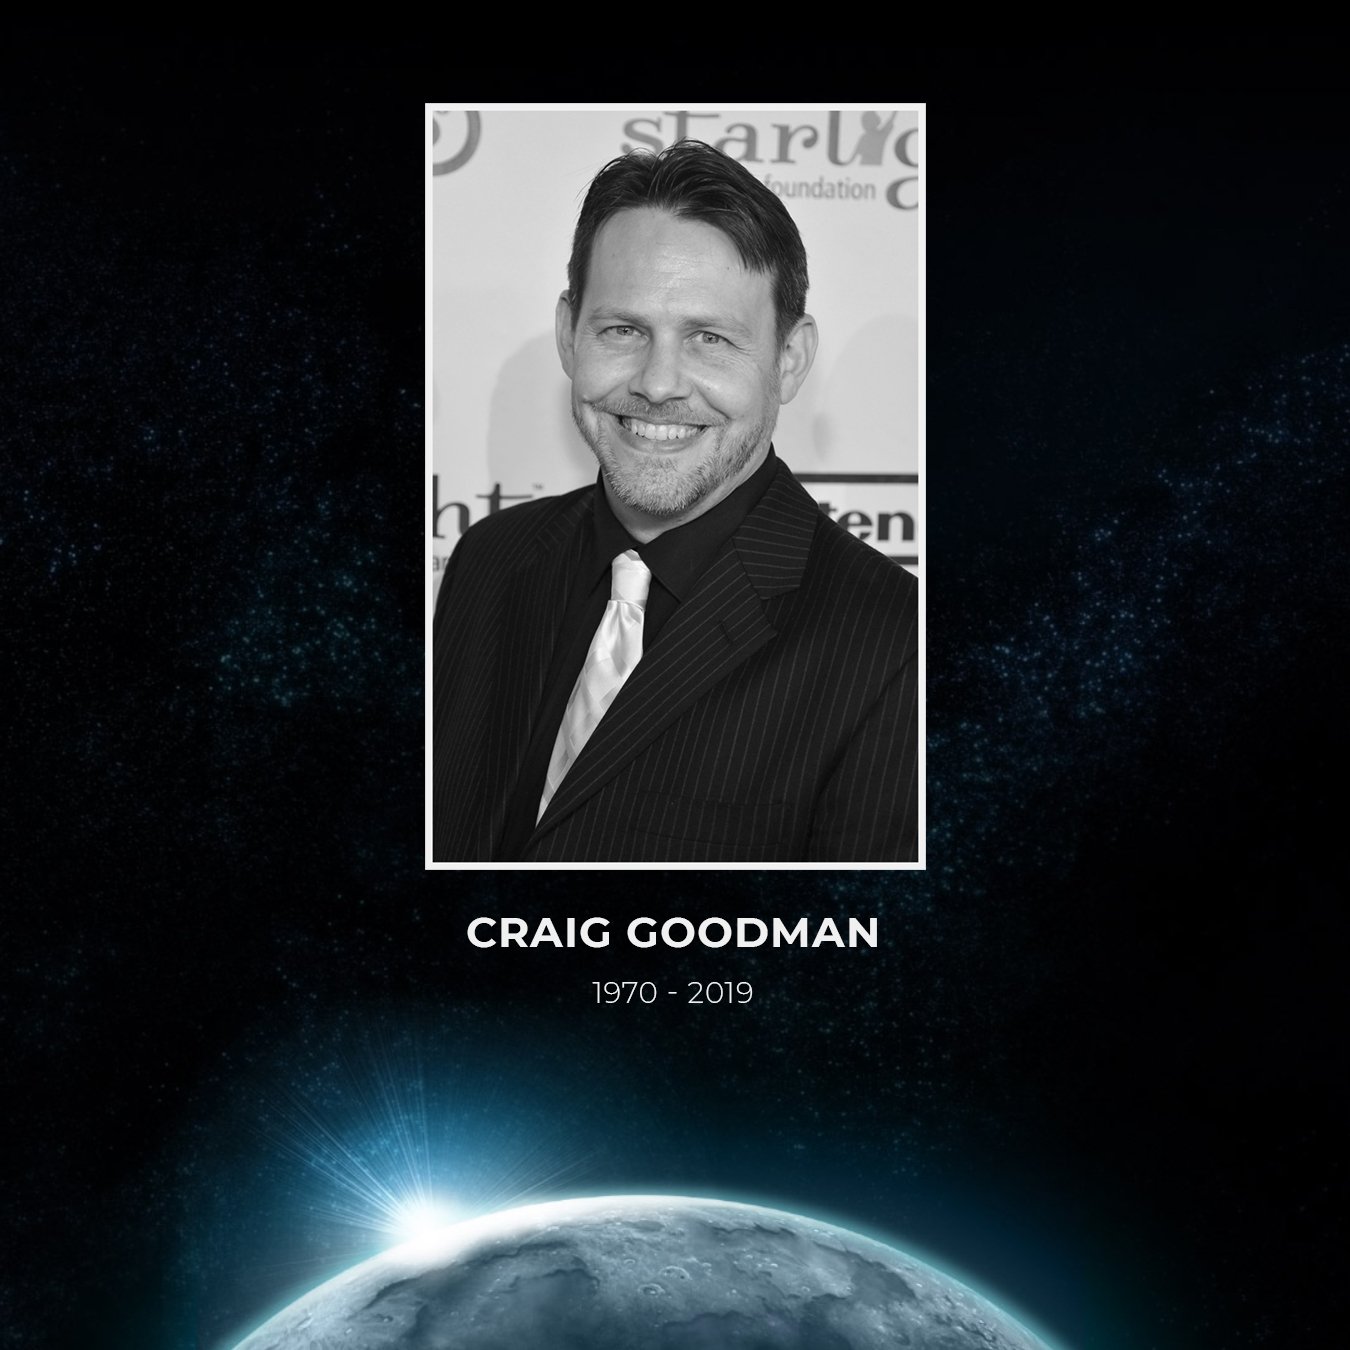 Insom年c老員工Craig Goodman不幸離世 曾參與《漫威蜘蛛人》製作